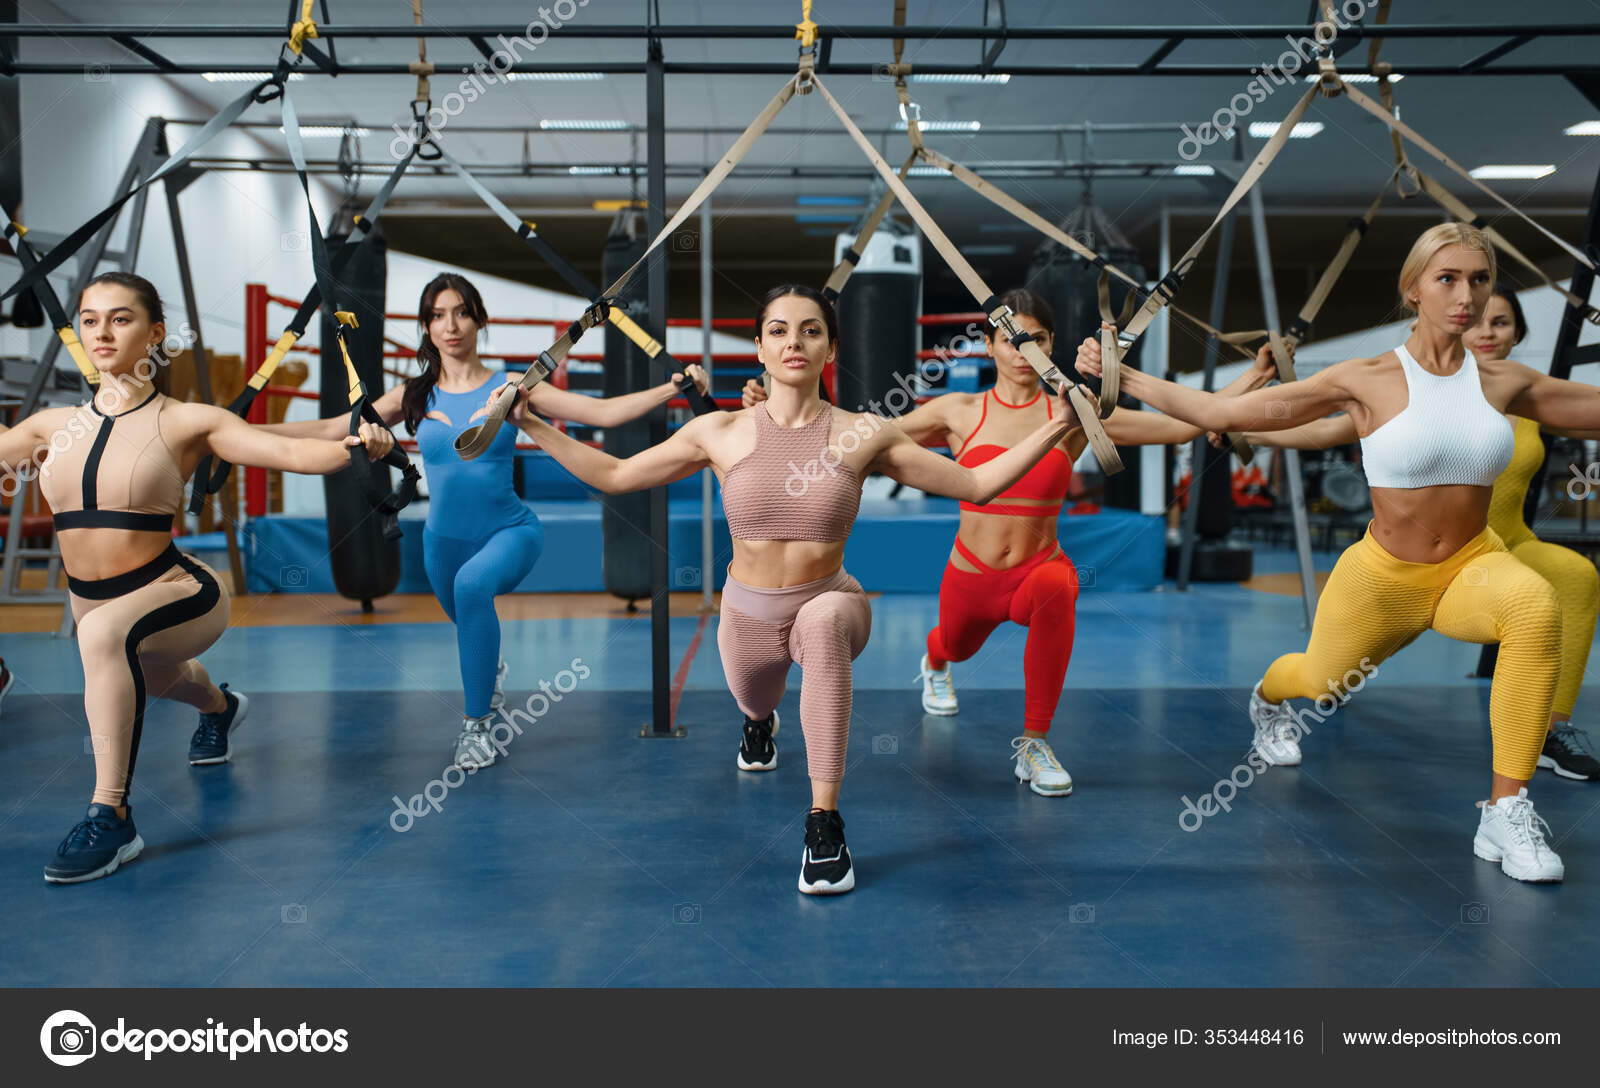 https://st3.depositphotos.com/1006542/35344/i/1600/depositphotos_353448416-stock-photo-group-attractive-women-doing-exercise.jpg